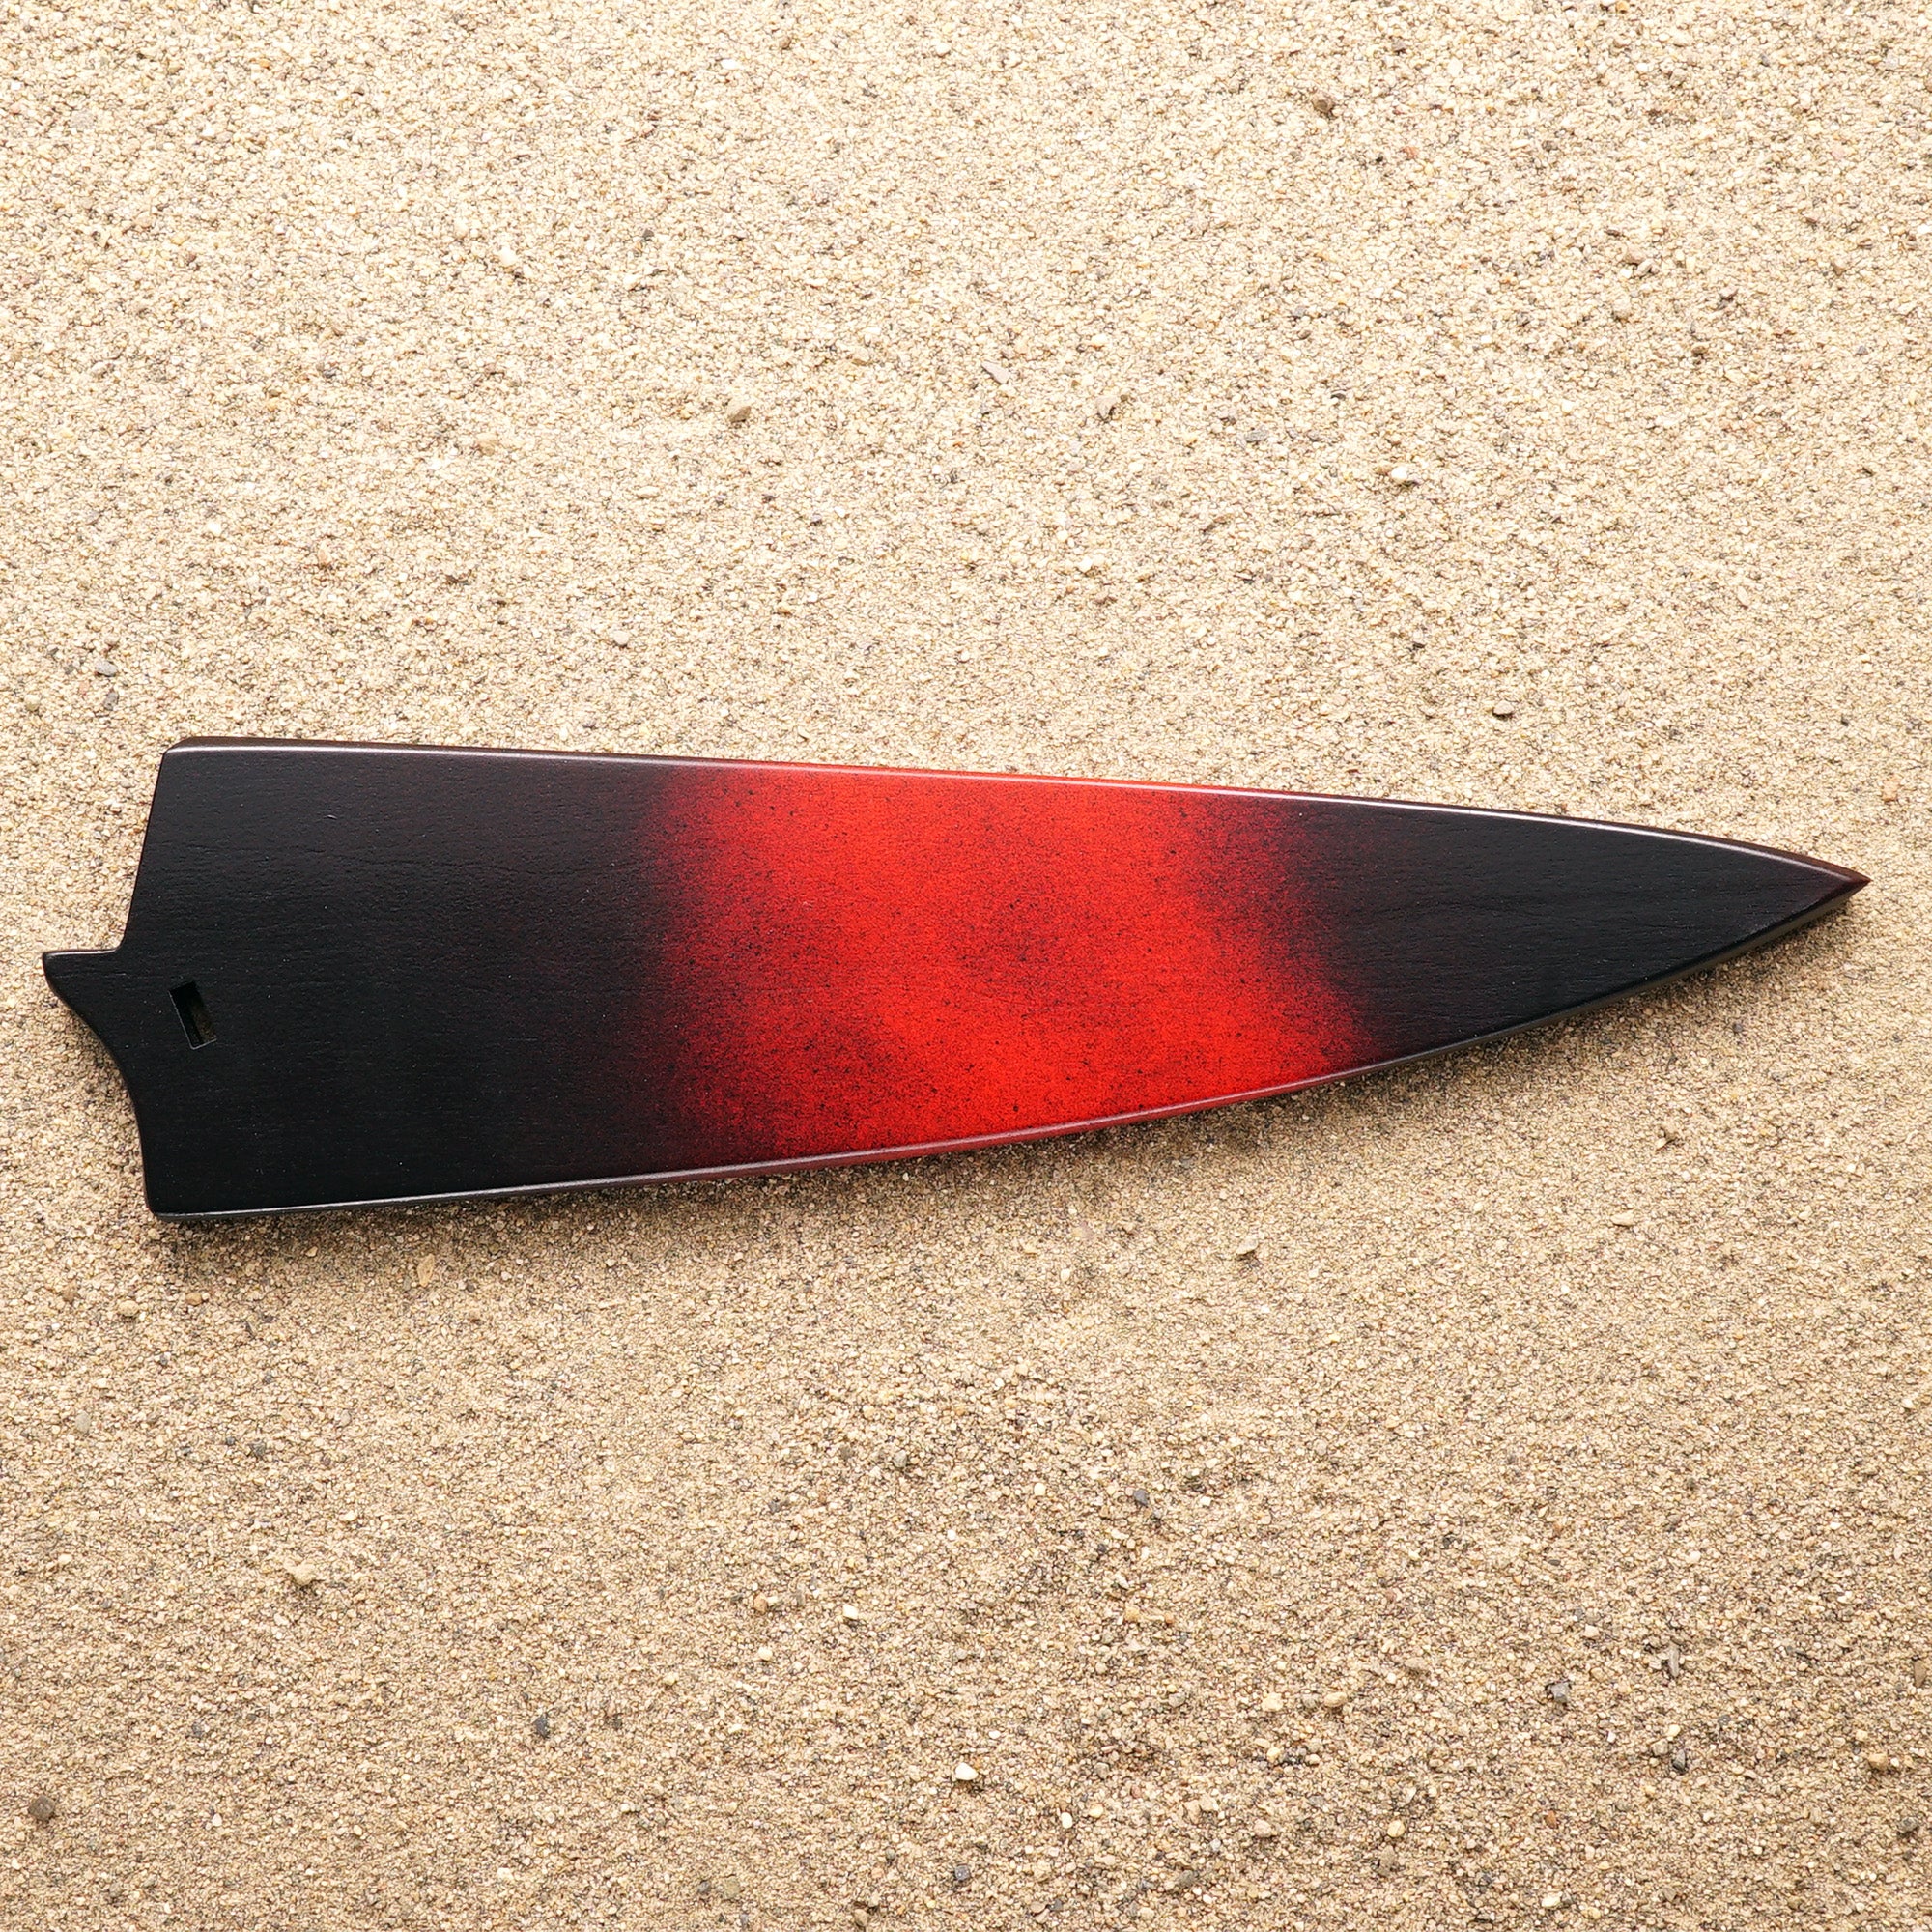 Black and red wood saya knife sheath for Town Cutler Baja 8.5" chef knife.